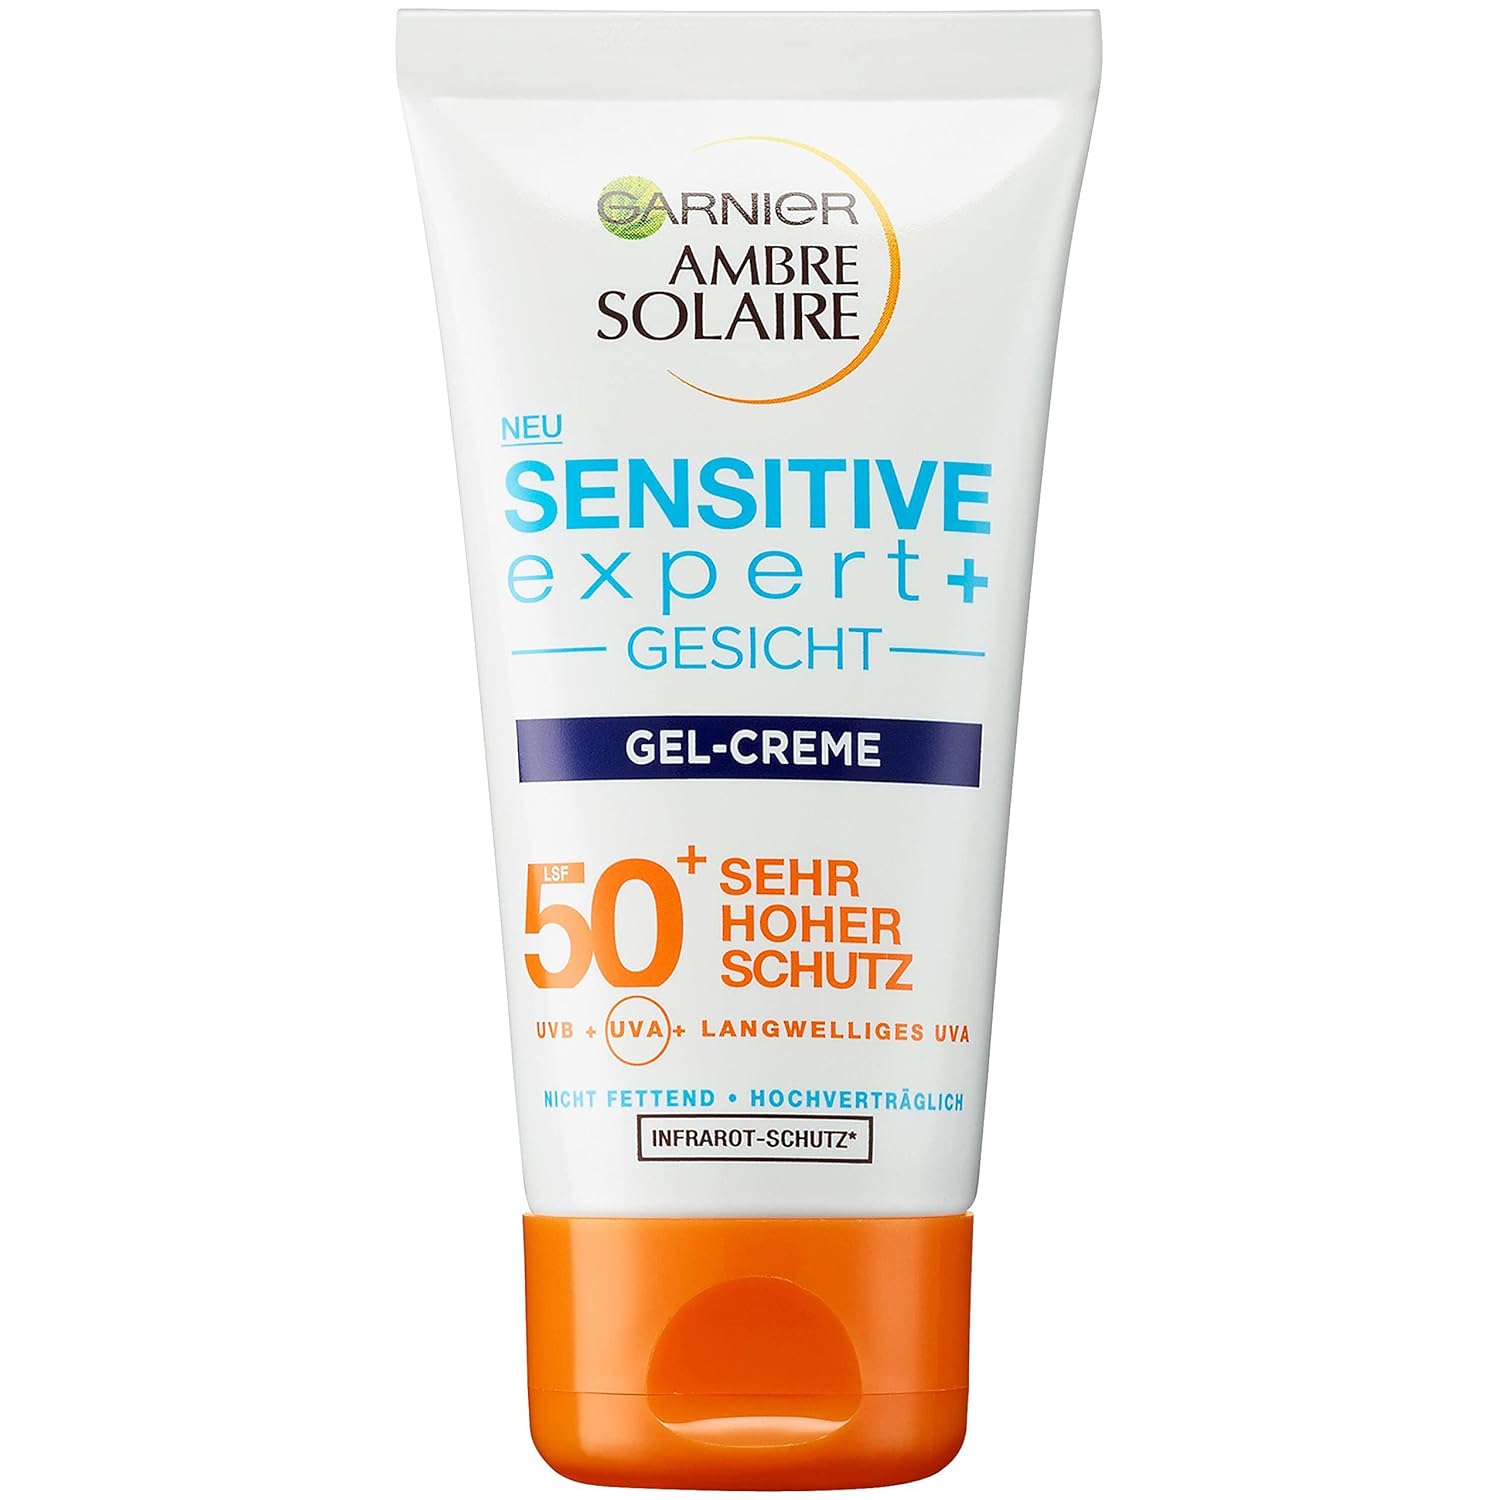 Garnier Gel Cream SPF 50+ Face Cream with Sun Protection for Light, Sensitive and Sun Intolerant Skin, Ambre Solaire Sensitive Expert+, 1 x 50 ml